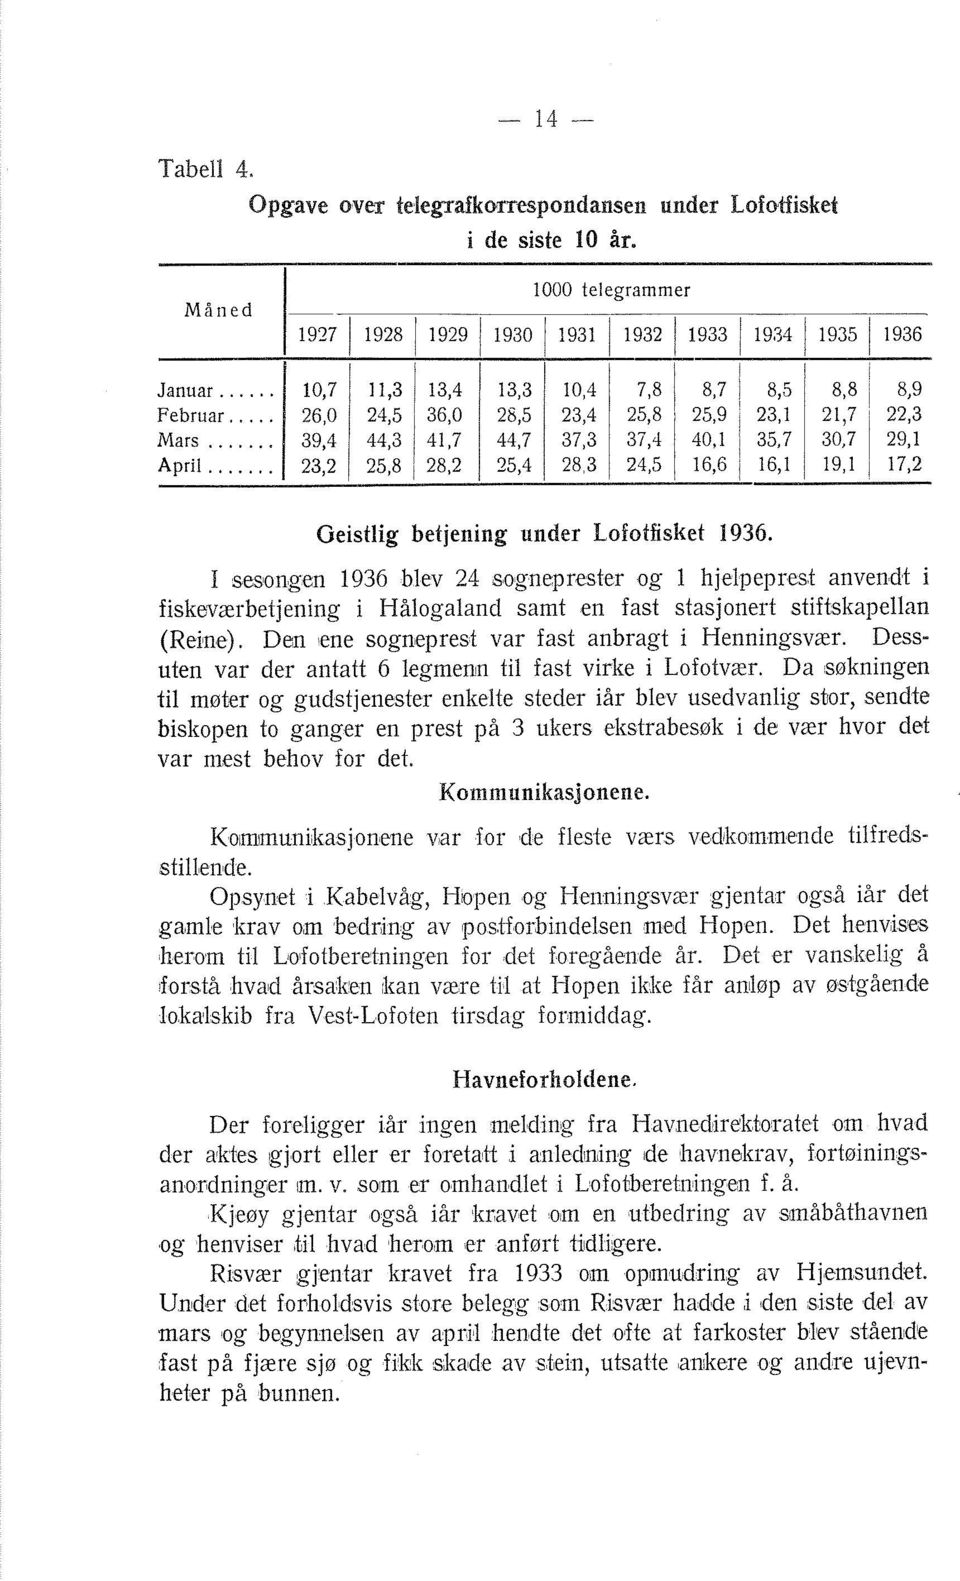 T sesongen 1936 blev 24 sogneprester og 1 hjelpeprest anvendt i fiskeværbetjeniiig i Hålogaland samt en fast stasjonert stiftskapellan (Reine). Den ene sogneprest var fast anbragt i Henningsvær.